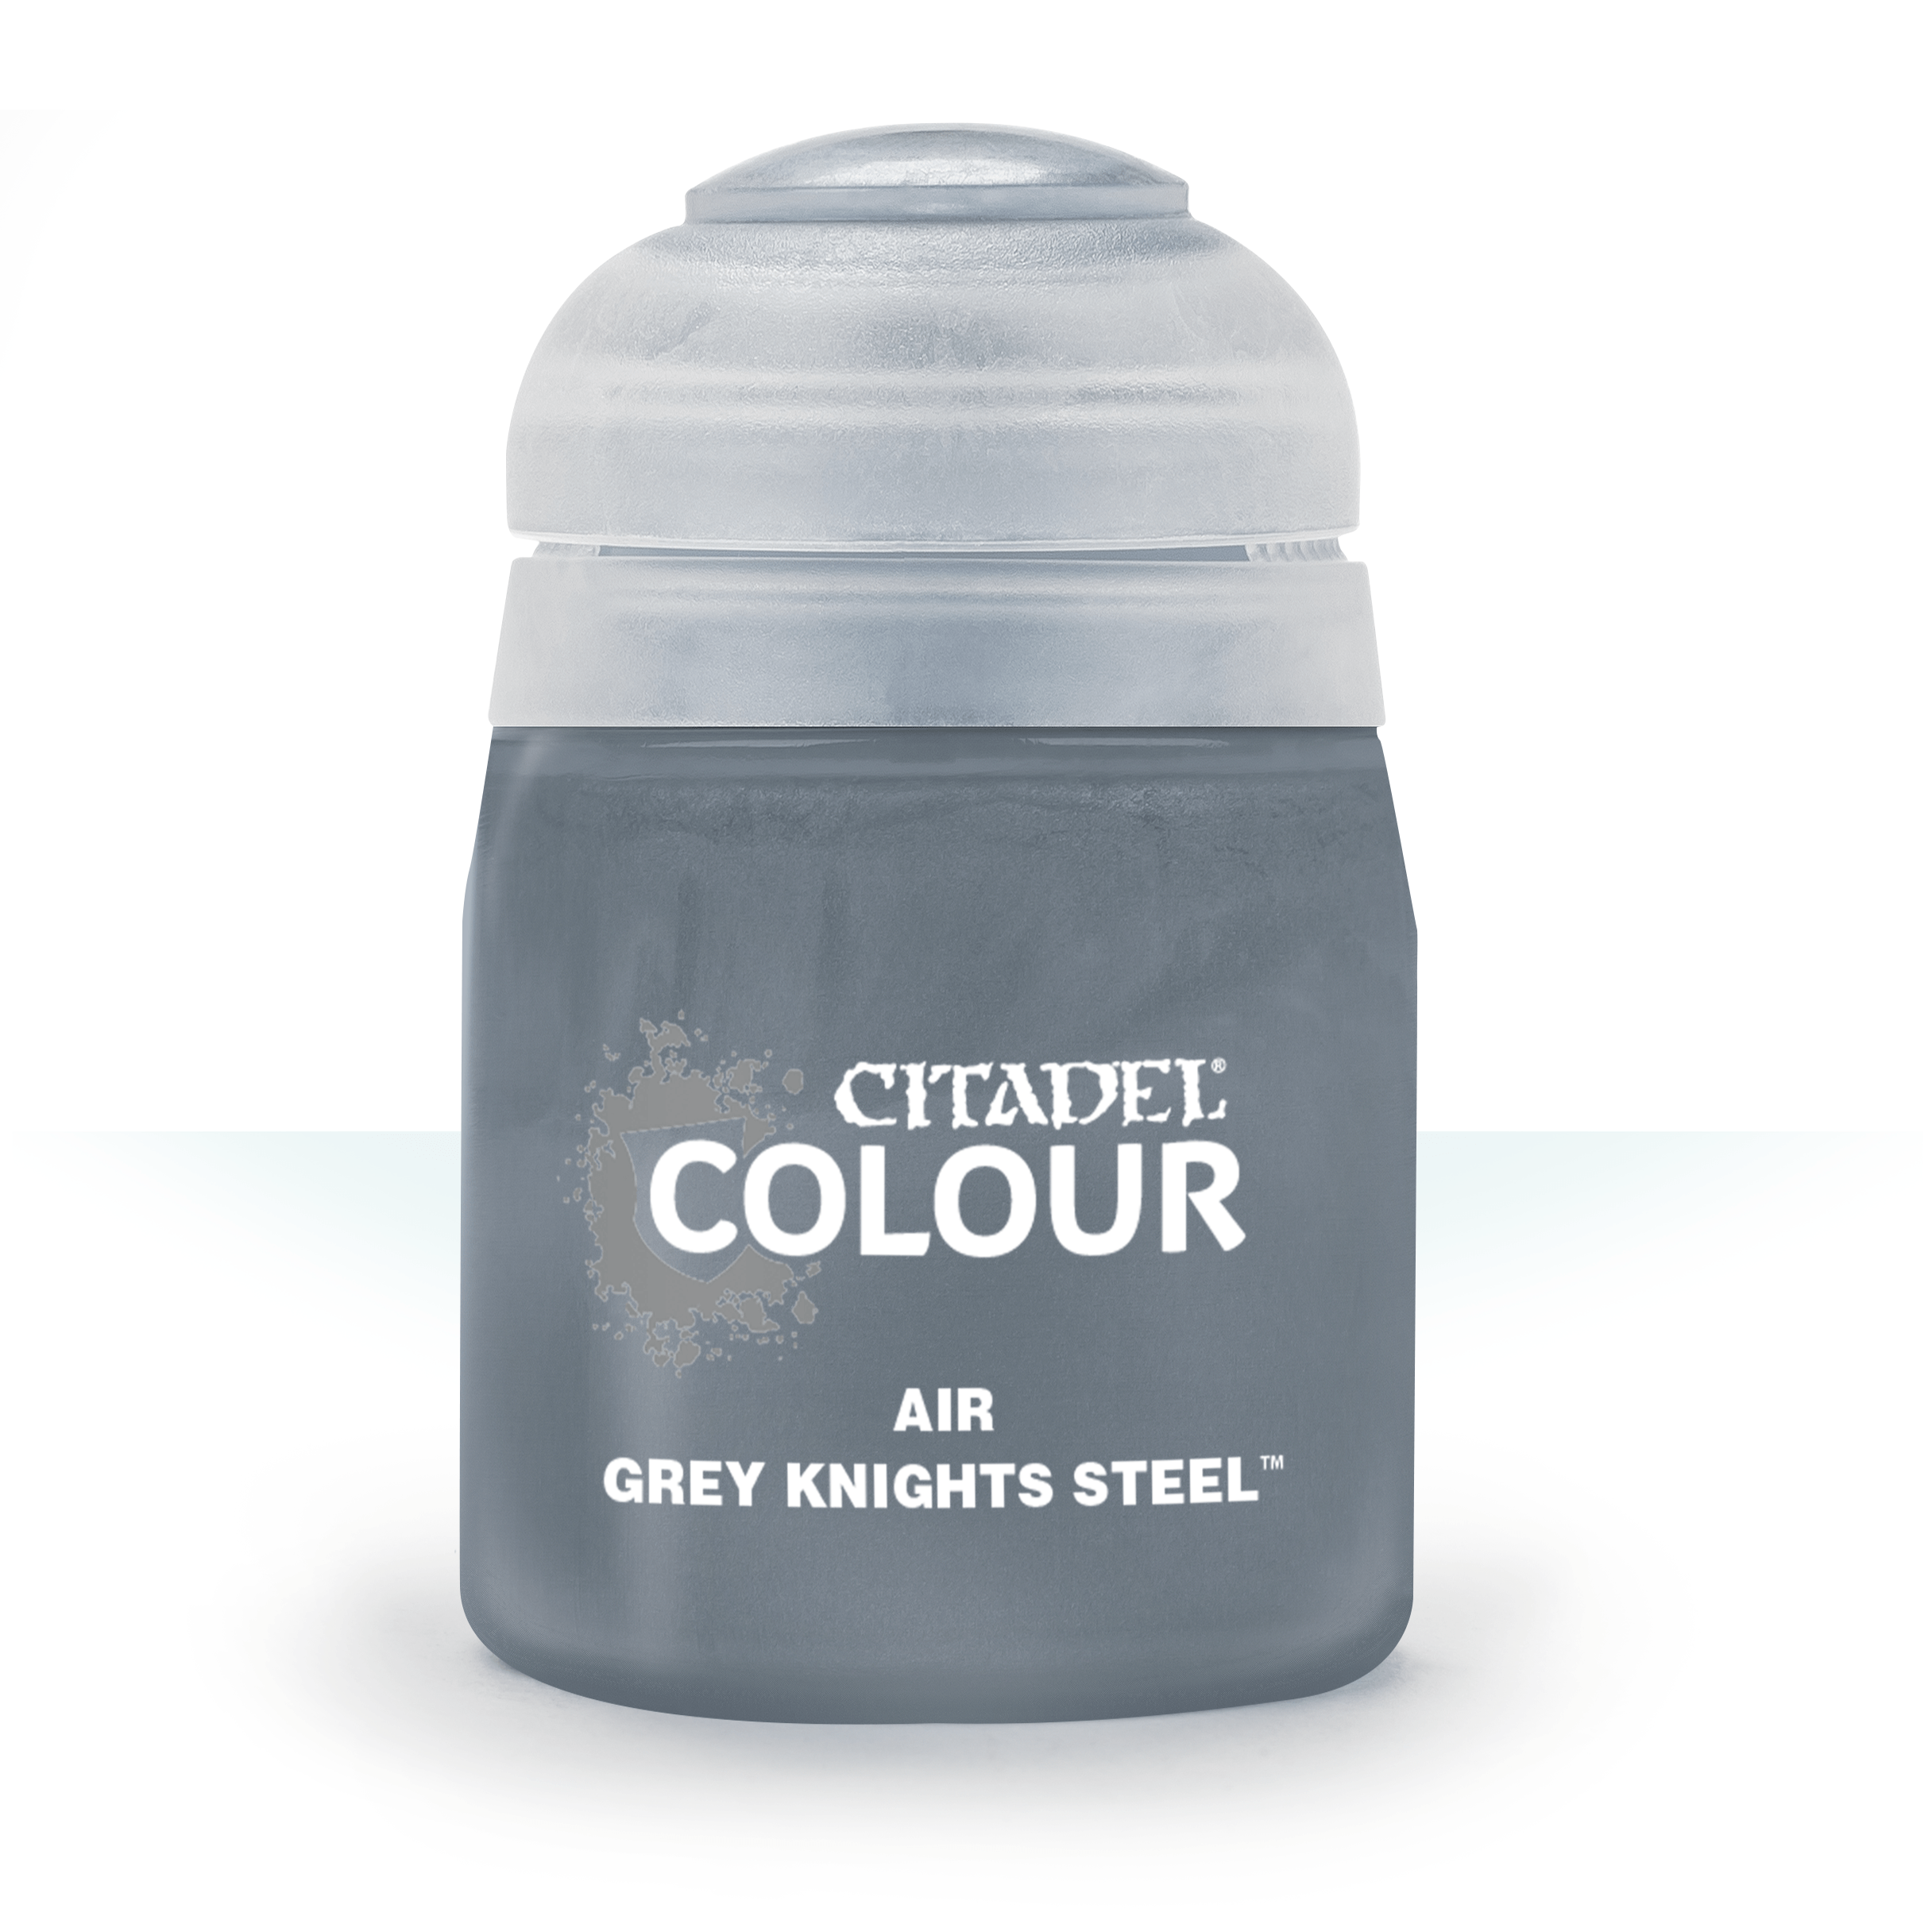 Air Grey Knights Steel - Citadel Colour - 24 ml